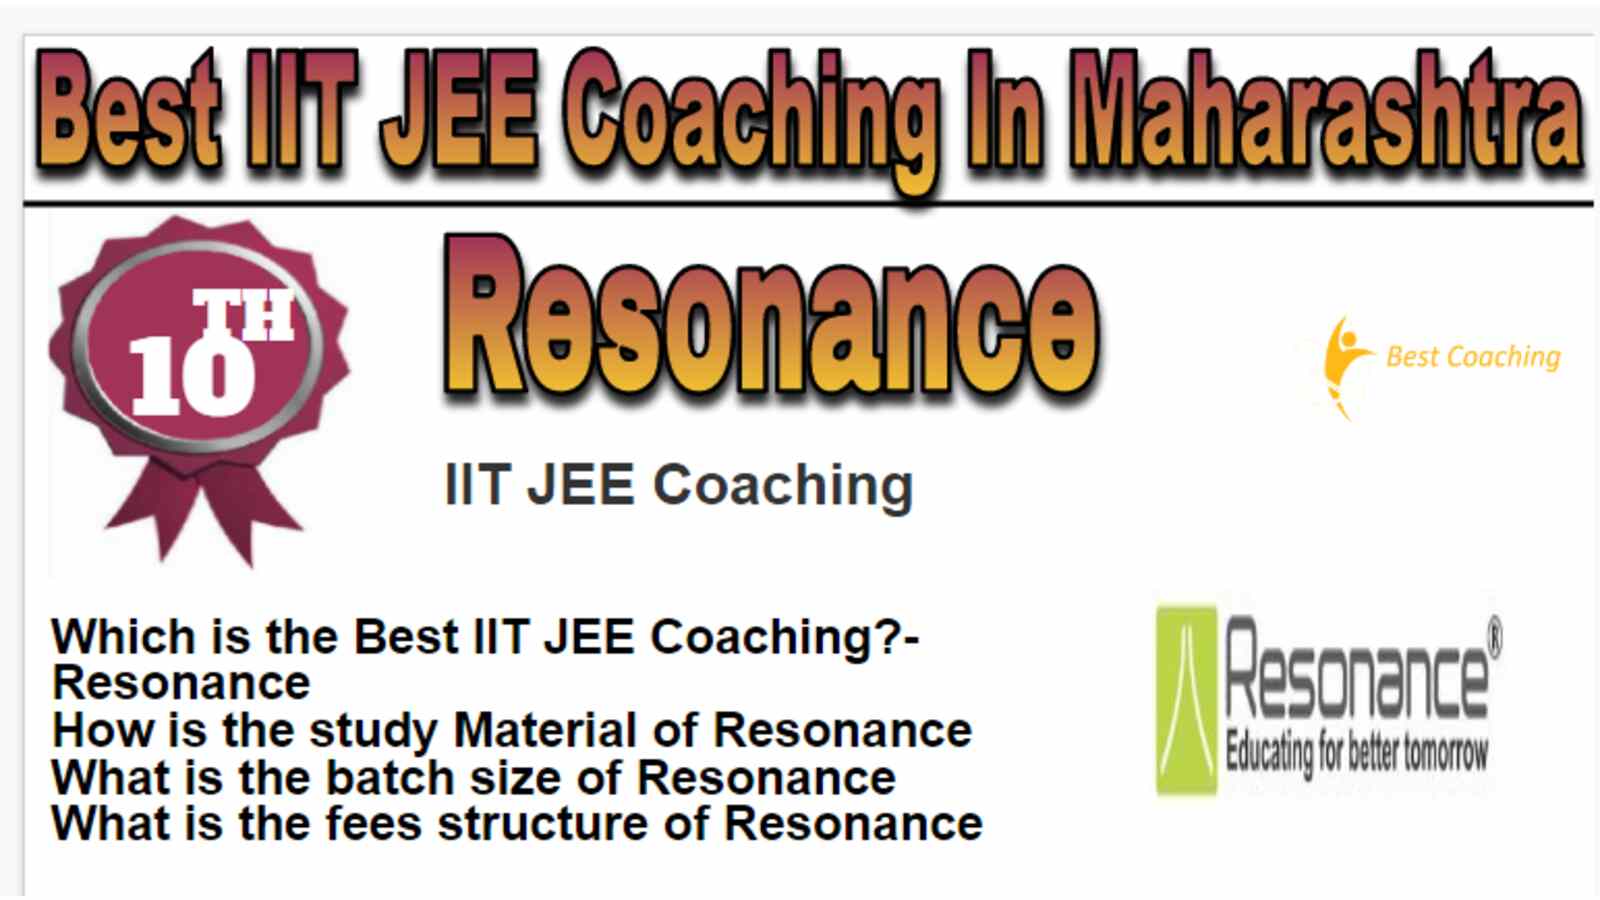 Rank 10 Best IIT JEE Coaching In Maharashtra